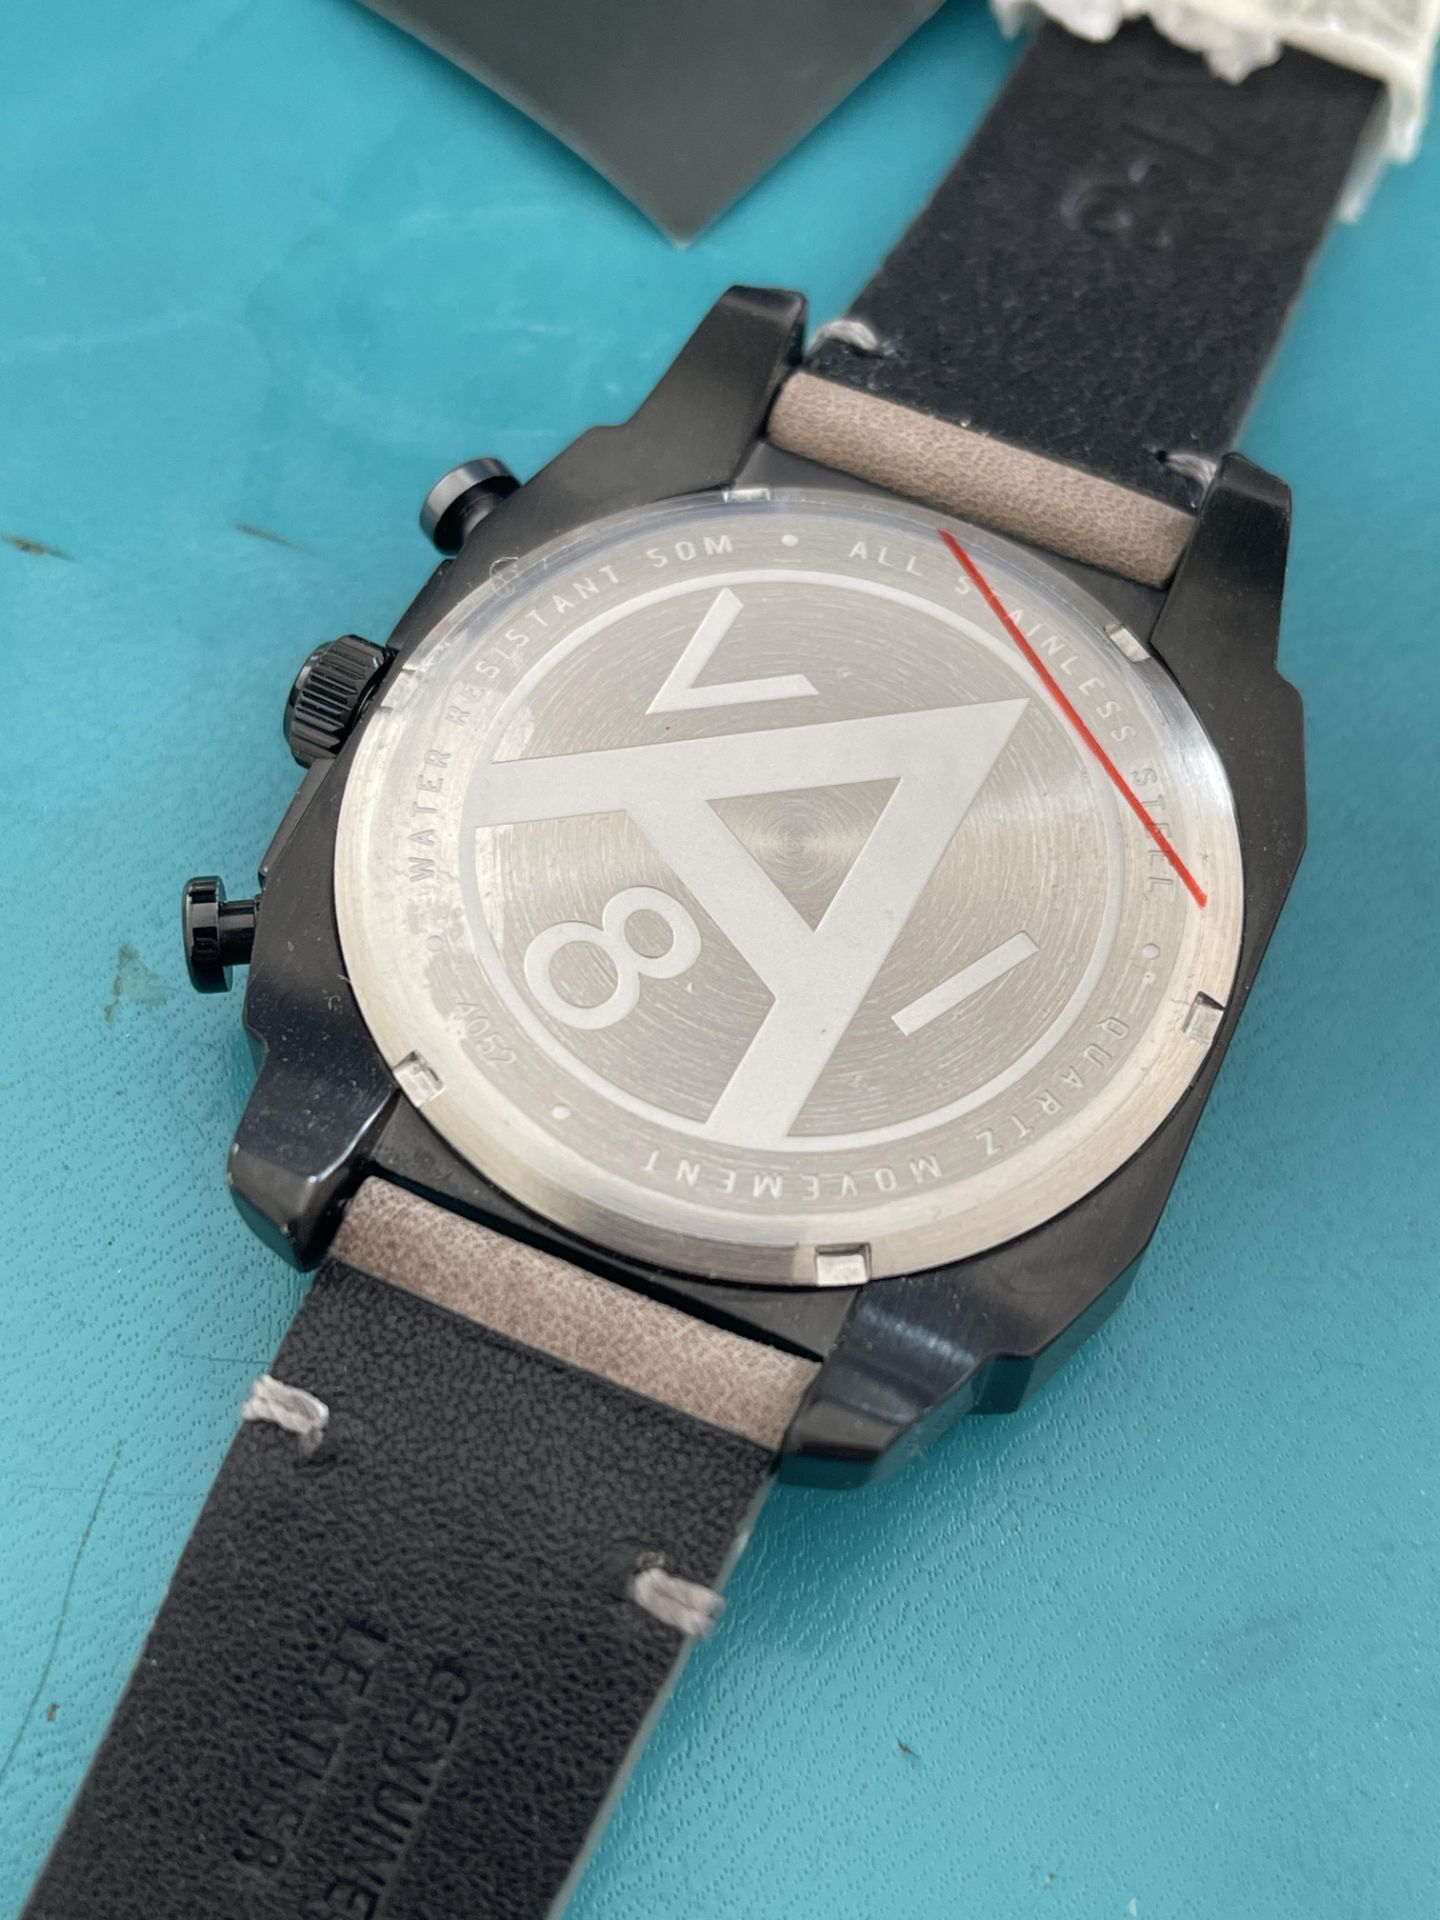 Avi-8 men's chronograph watch - Image 6 of 6